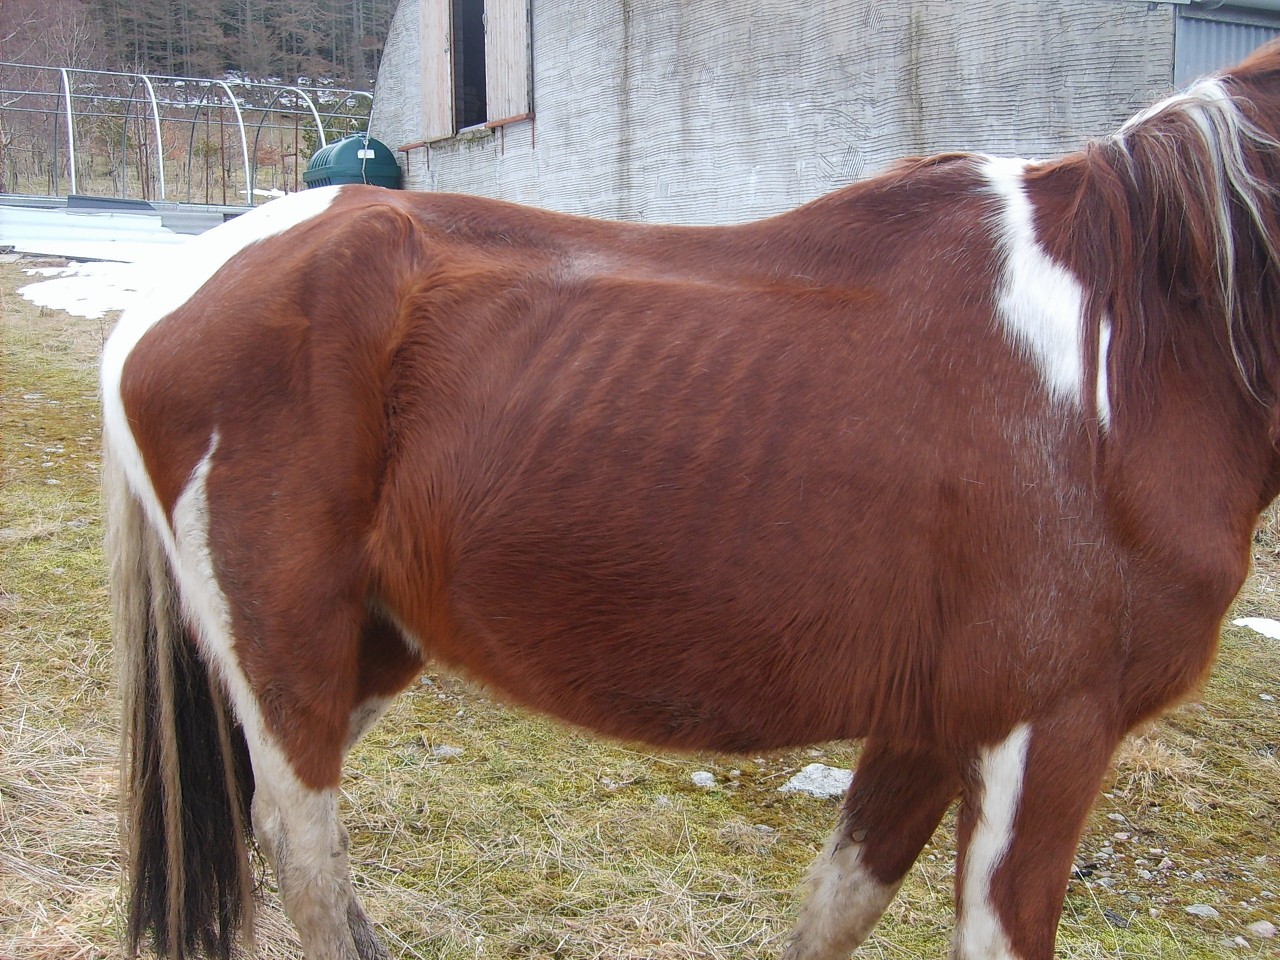 Emaciated horse